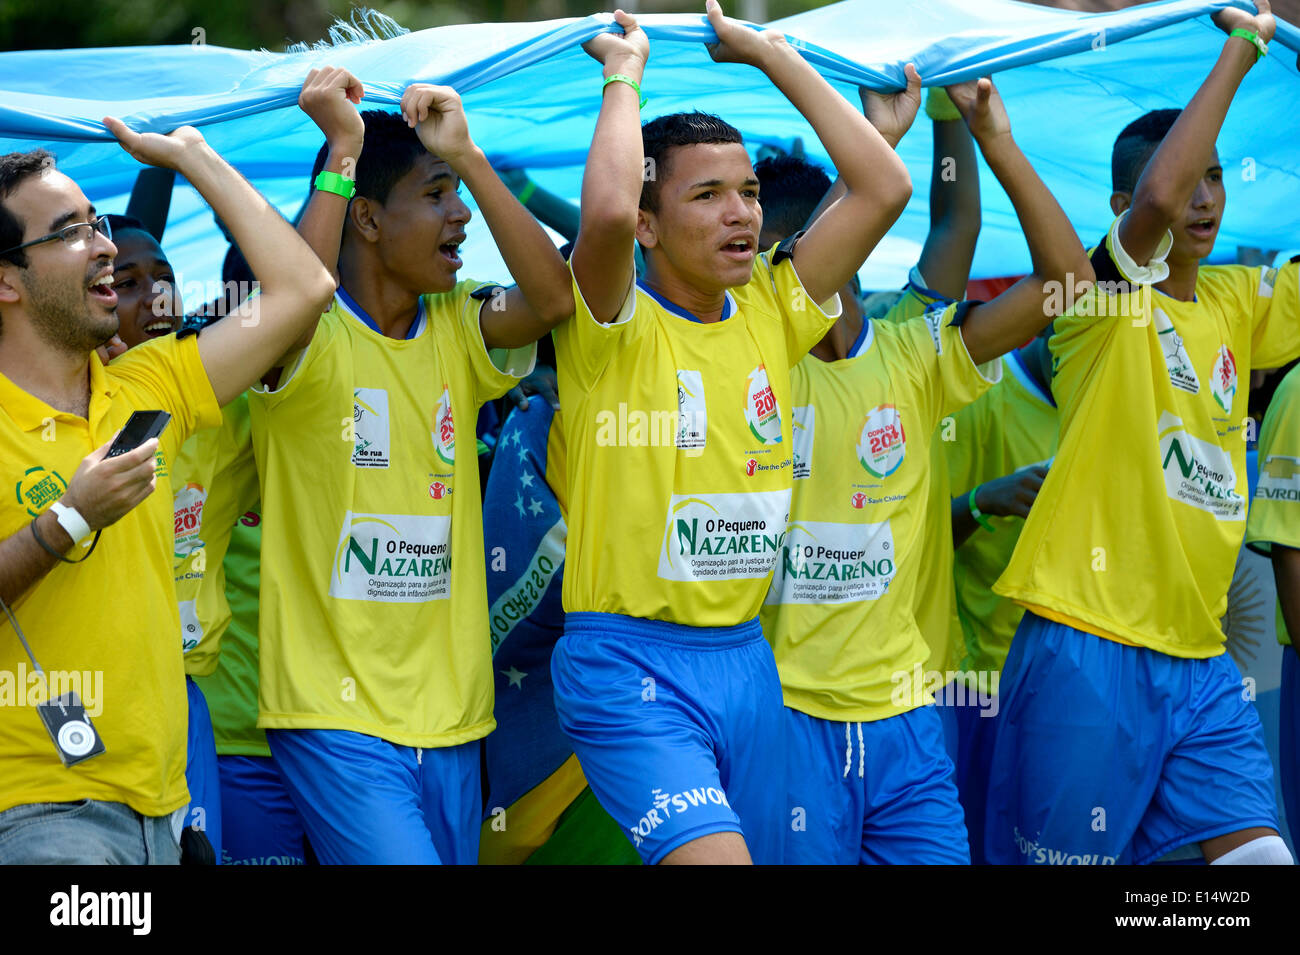 Team from Brazil entering the stadium, opening ceremony of Street Children World Cup 2014, Rio de Janeiro, Brazil Stock Photo